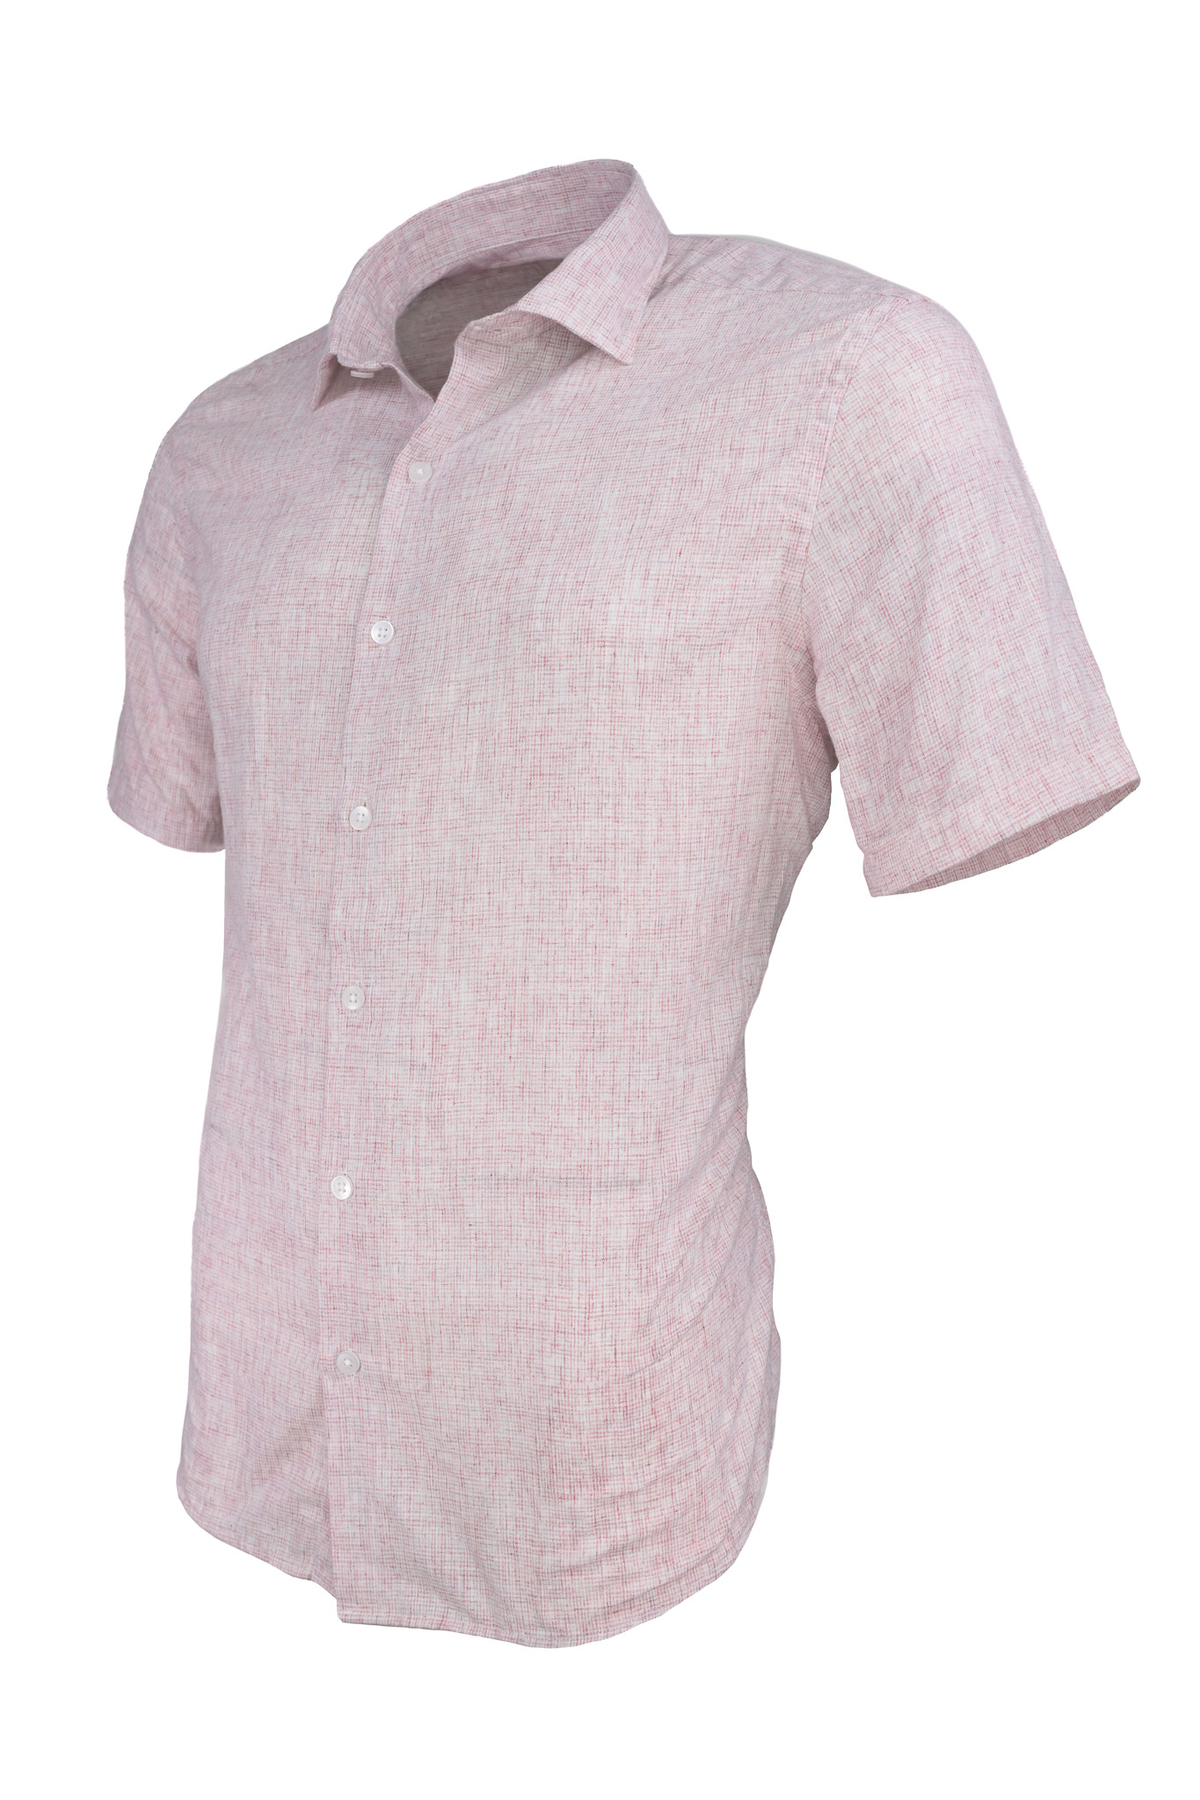 Robert Barakett Legato Short Sleeve Shirt - Pink